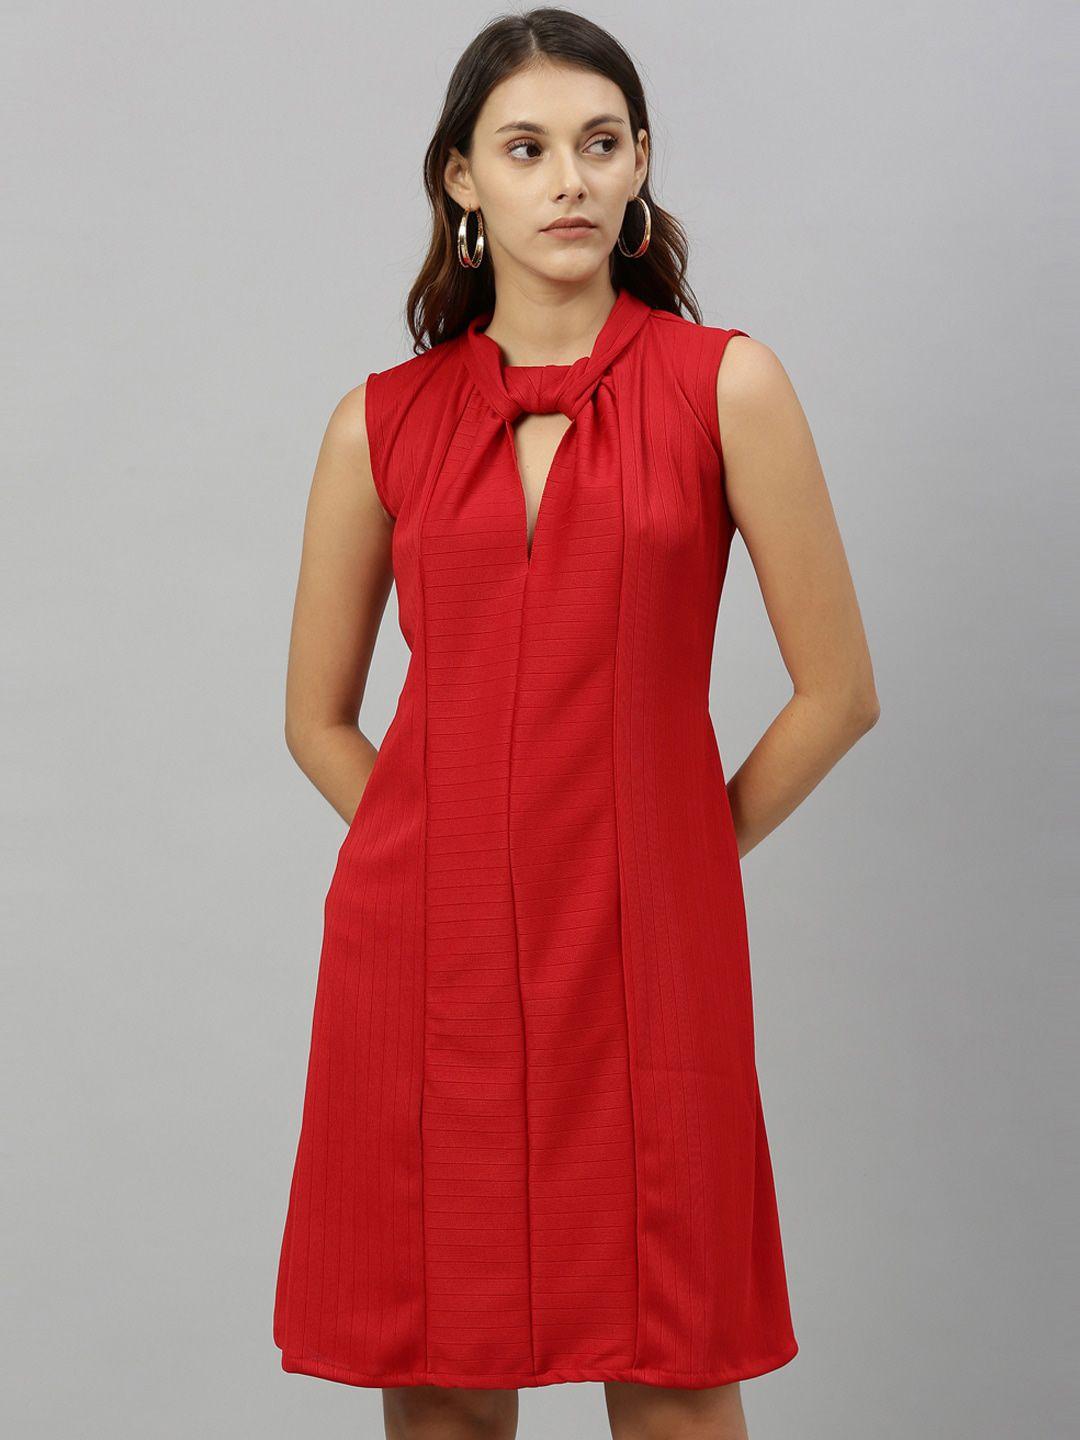 rareism women red solid a-line dress